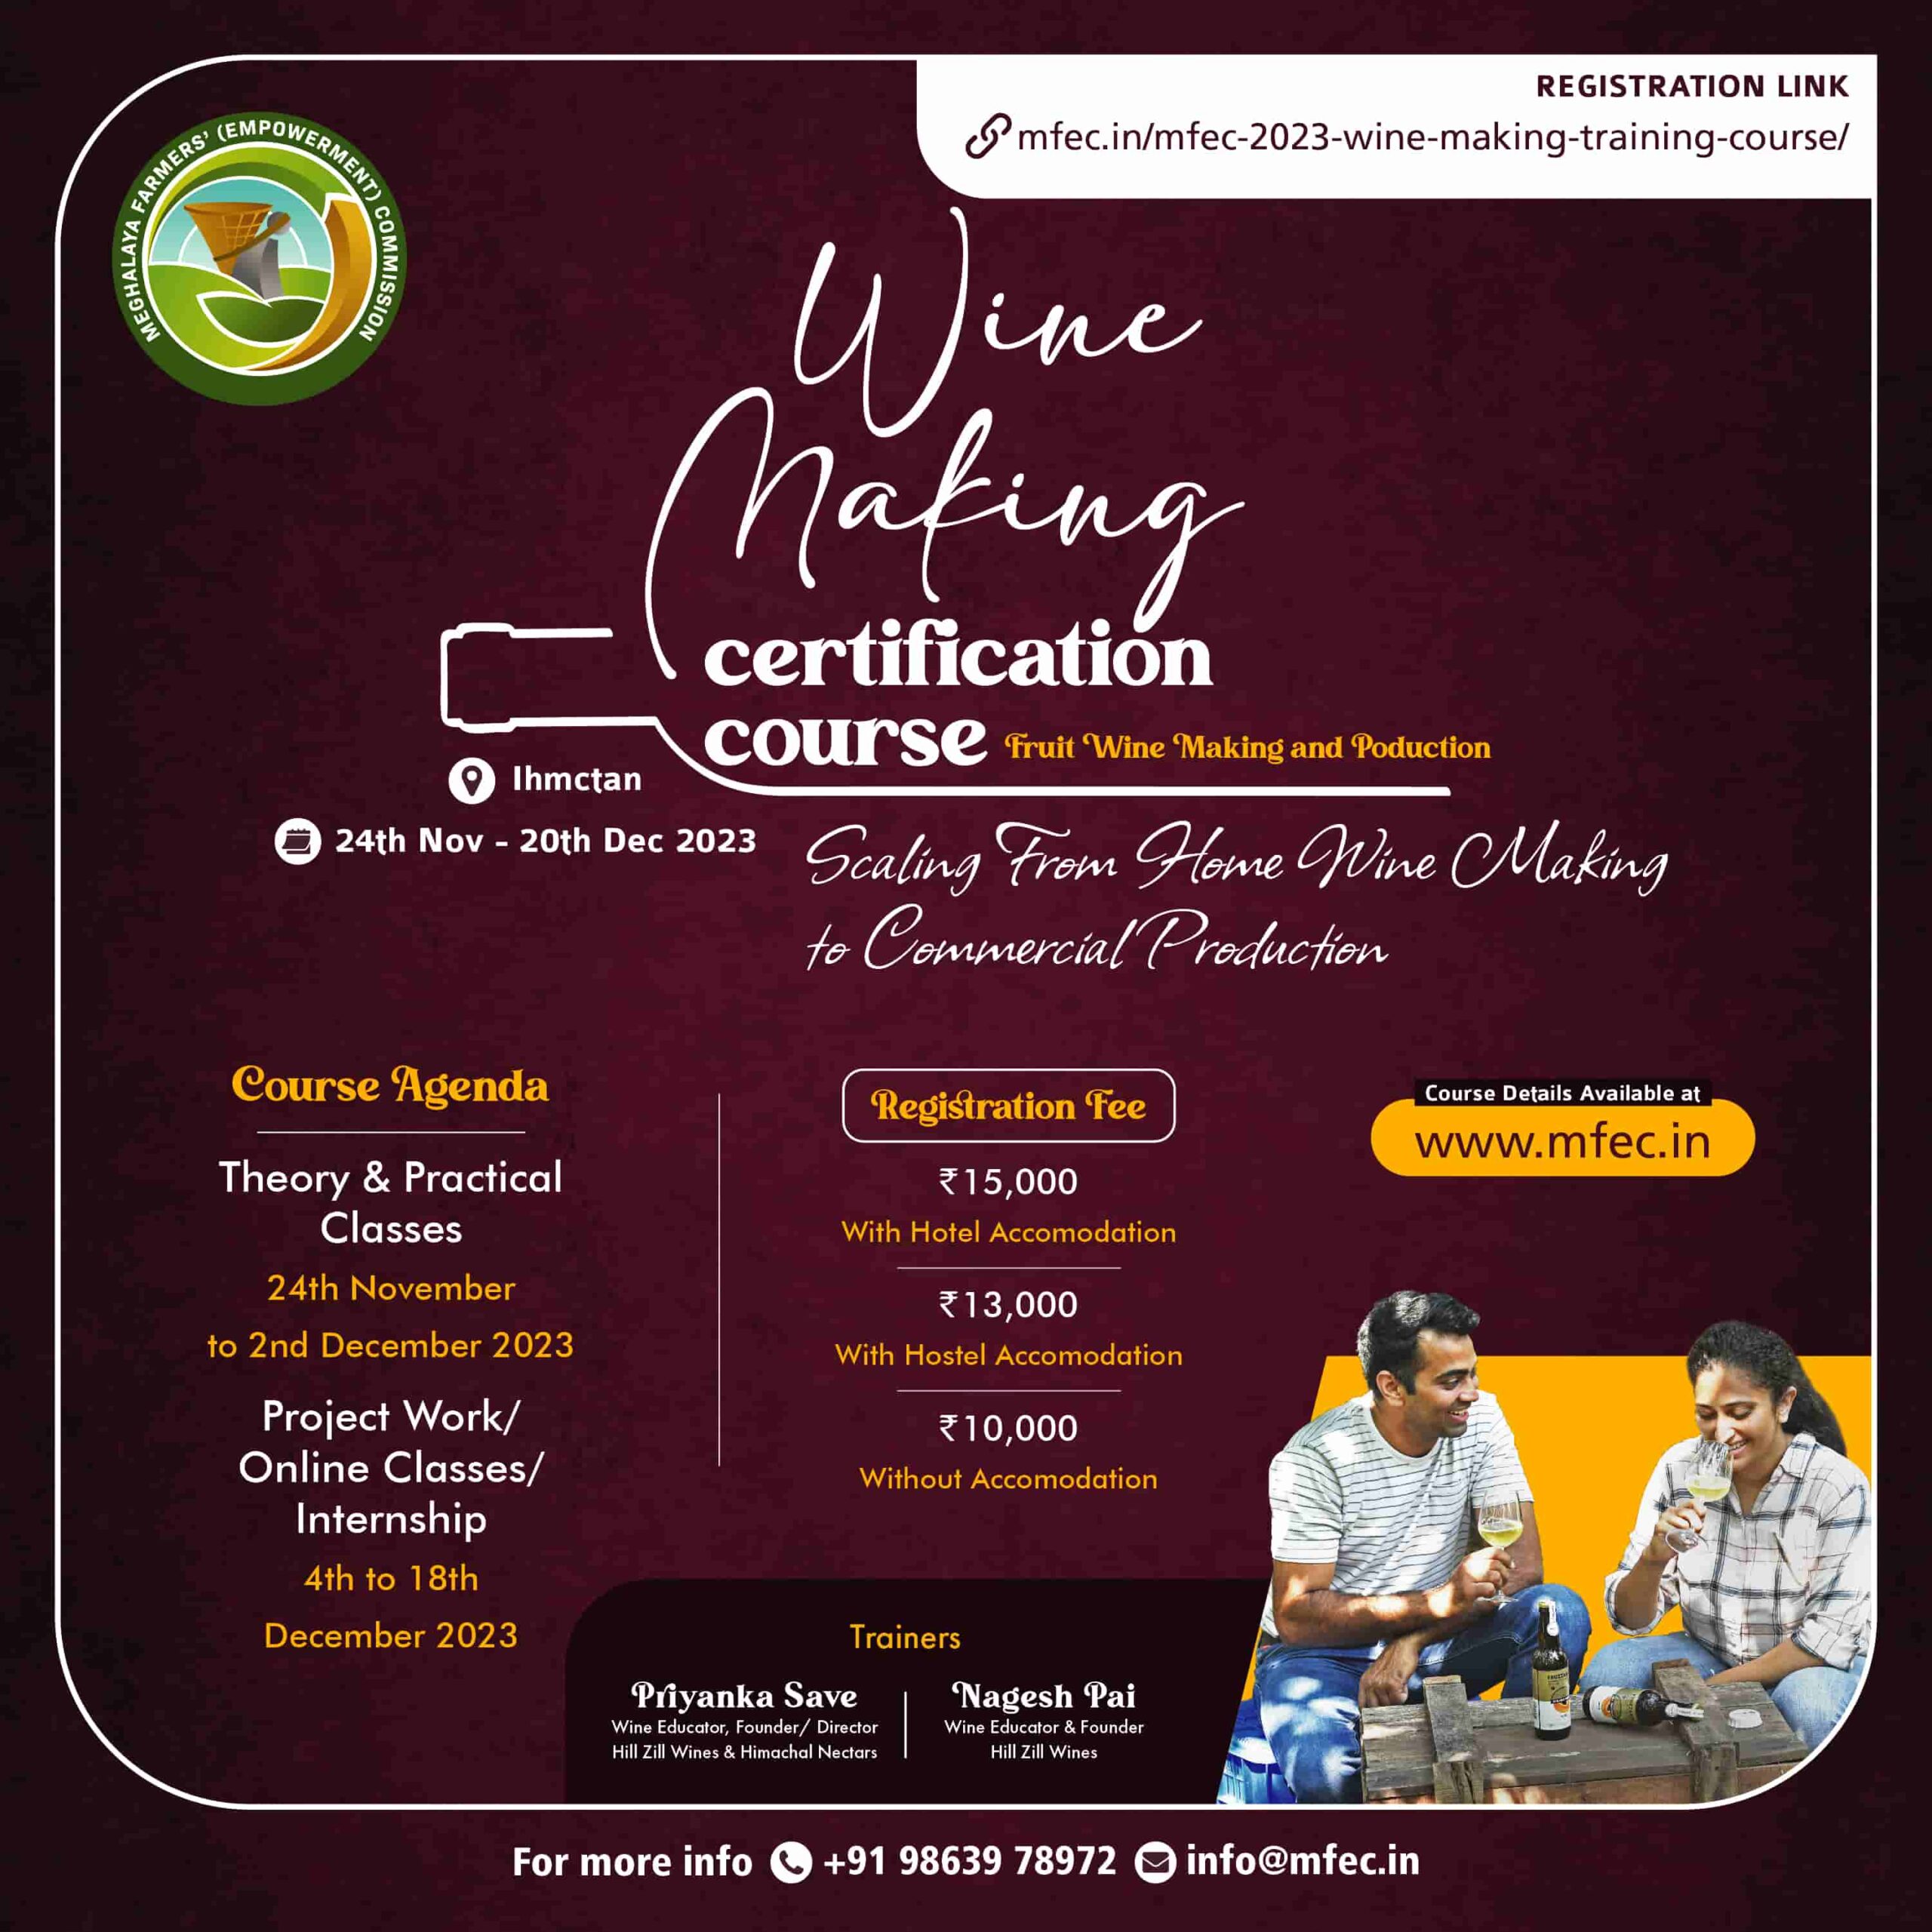 MFEC Wine Making Certification